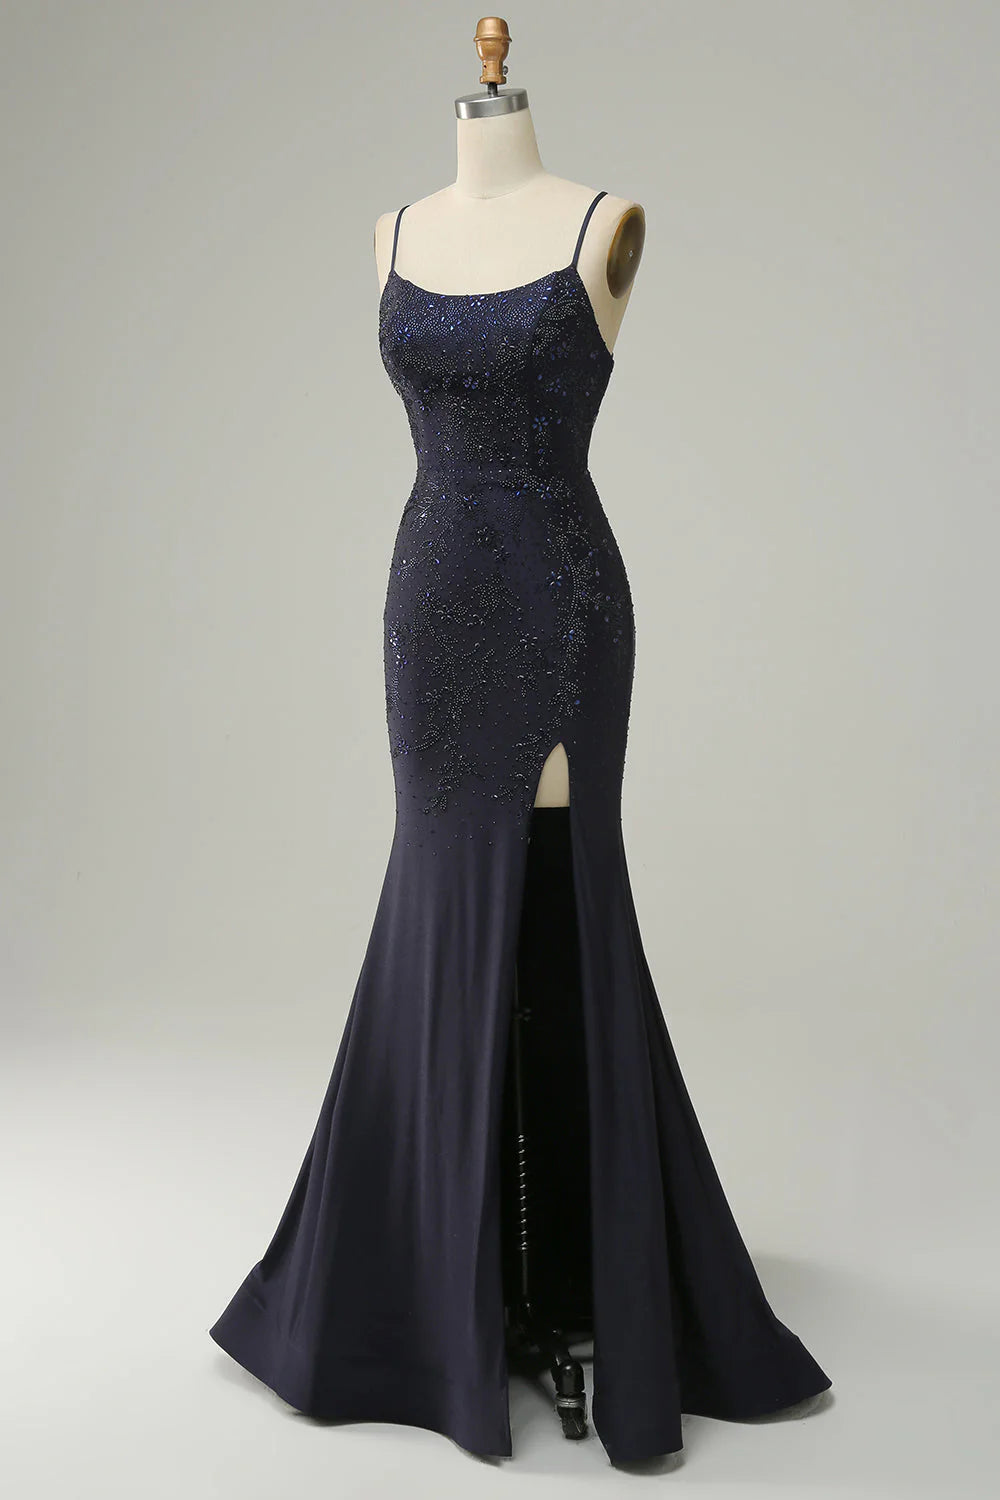 NEW Navy Strapless Sweetheart Beaded Prom Dress with Split, Sz 2, Retails $189